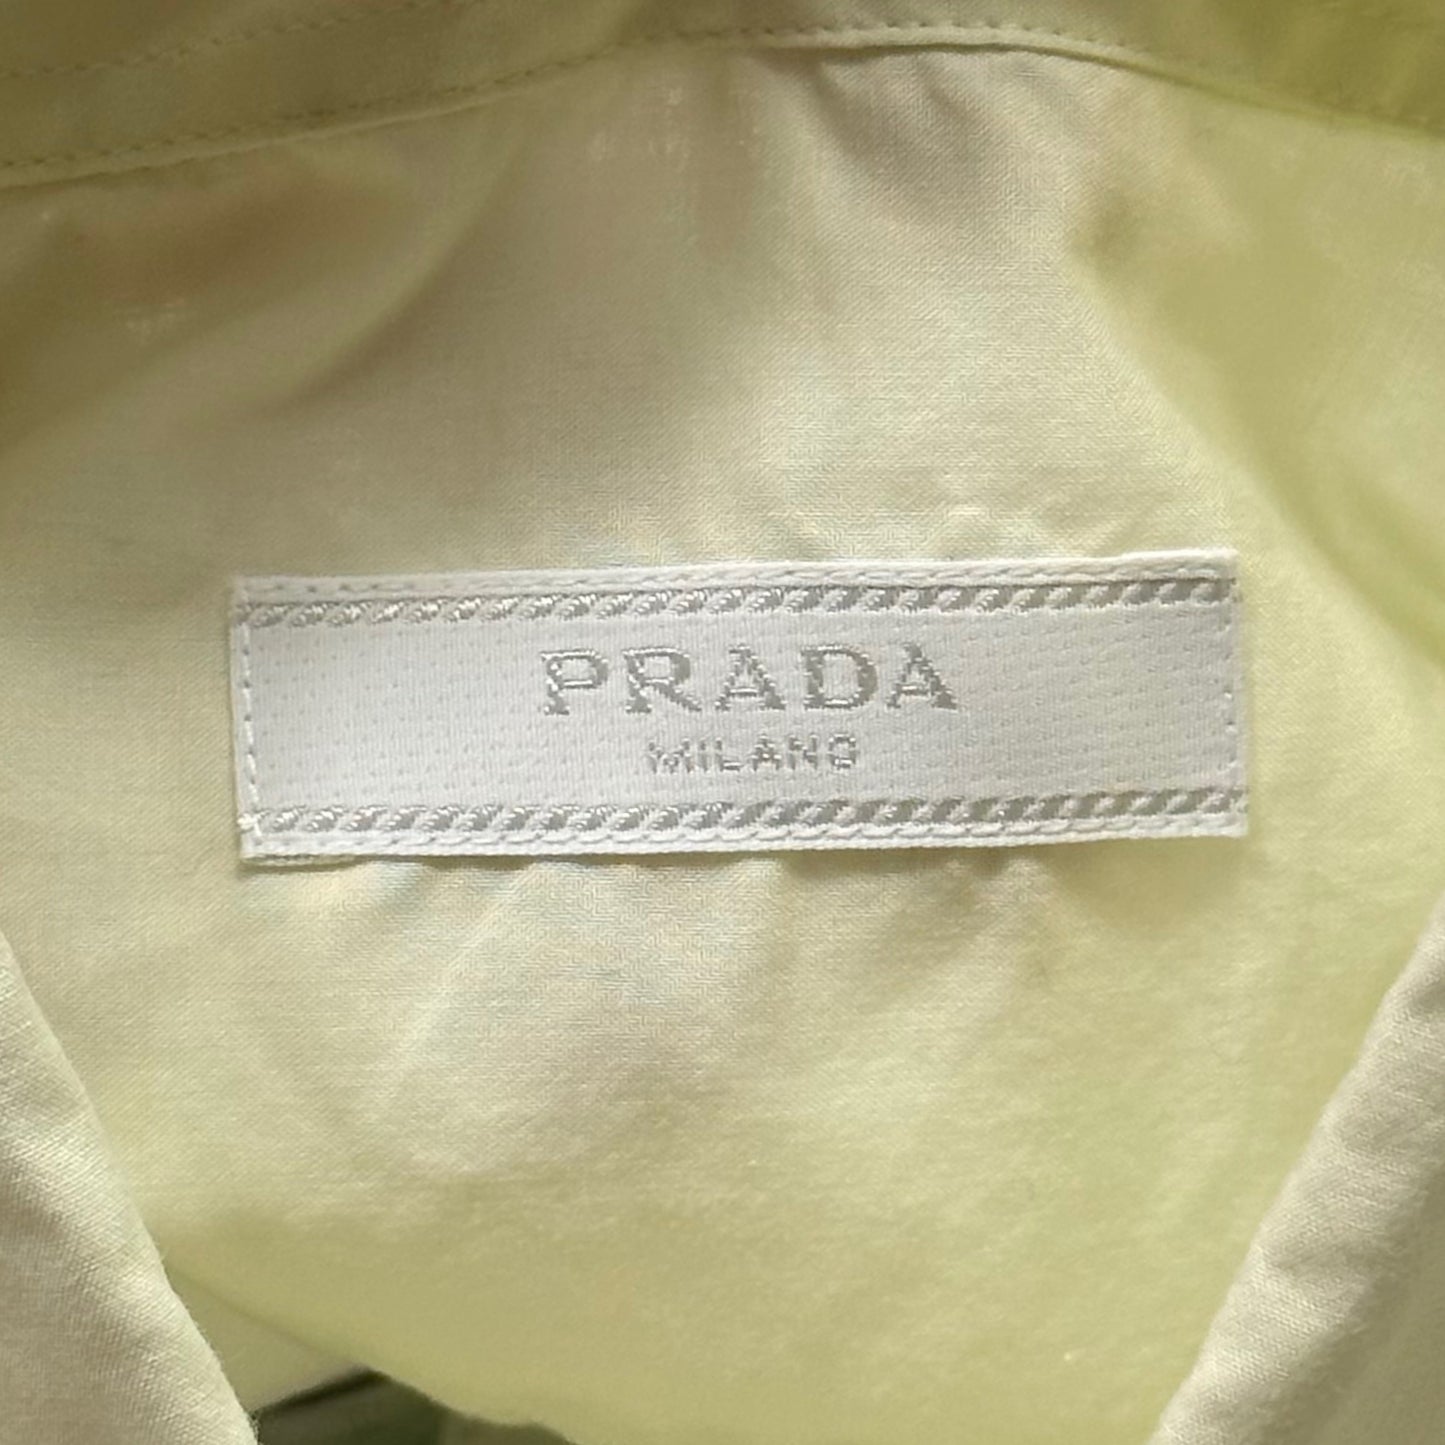 Prada Milano 2017 Comic Print Boxy Cotton Shirt + Tags Box Dustbag etc - XL